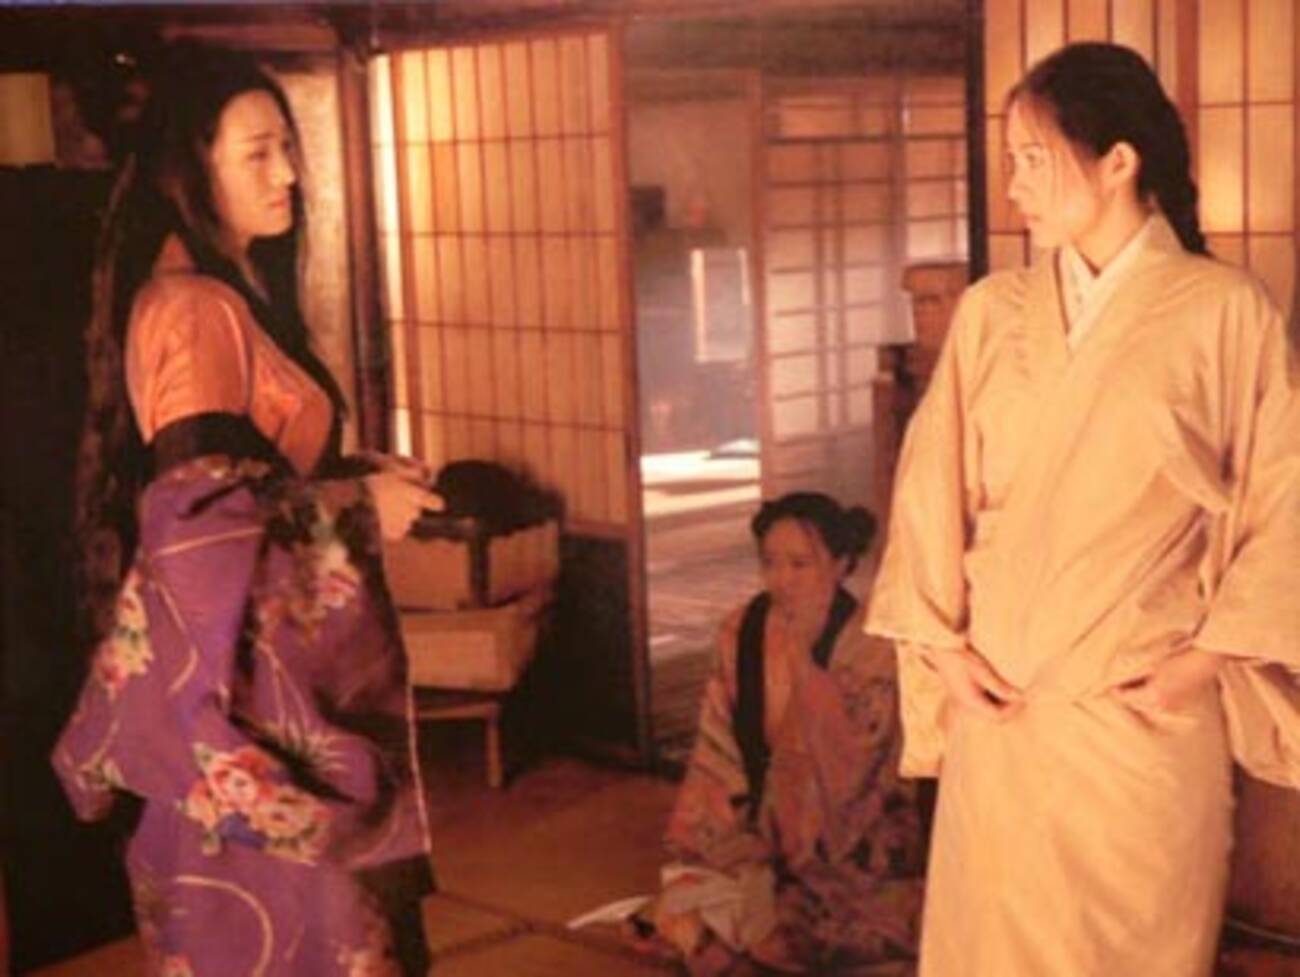 Memoirs of a Geisha: Read Book, (maybe) Watch Film